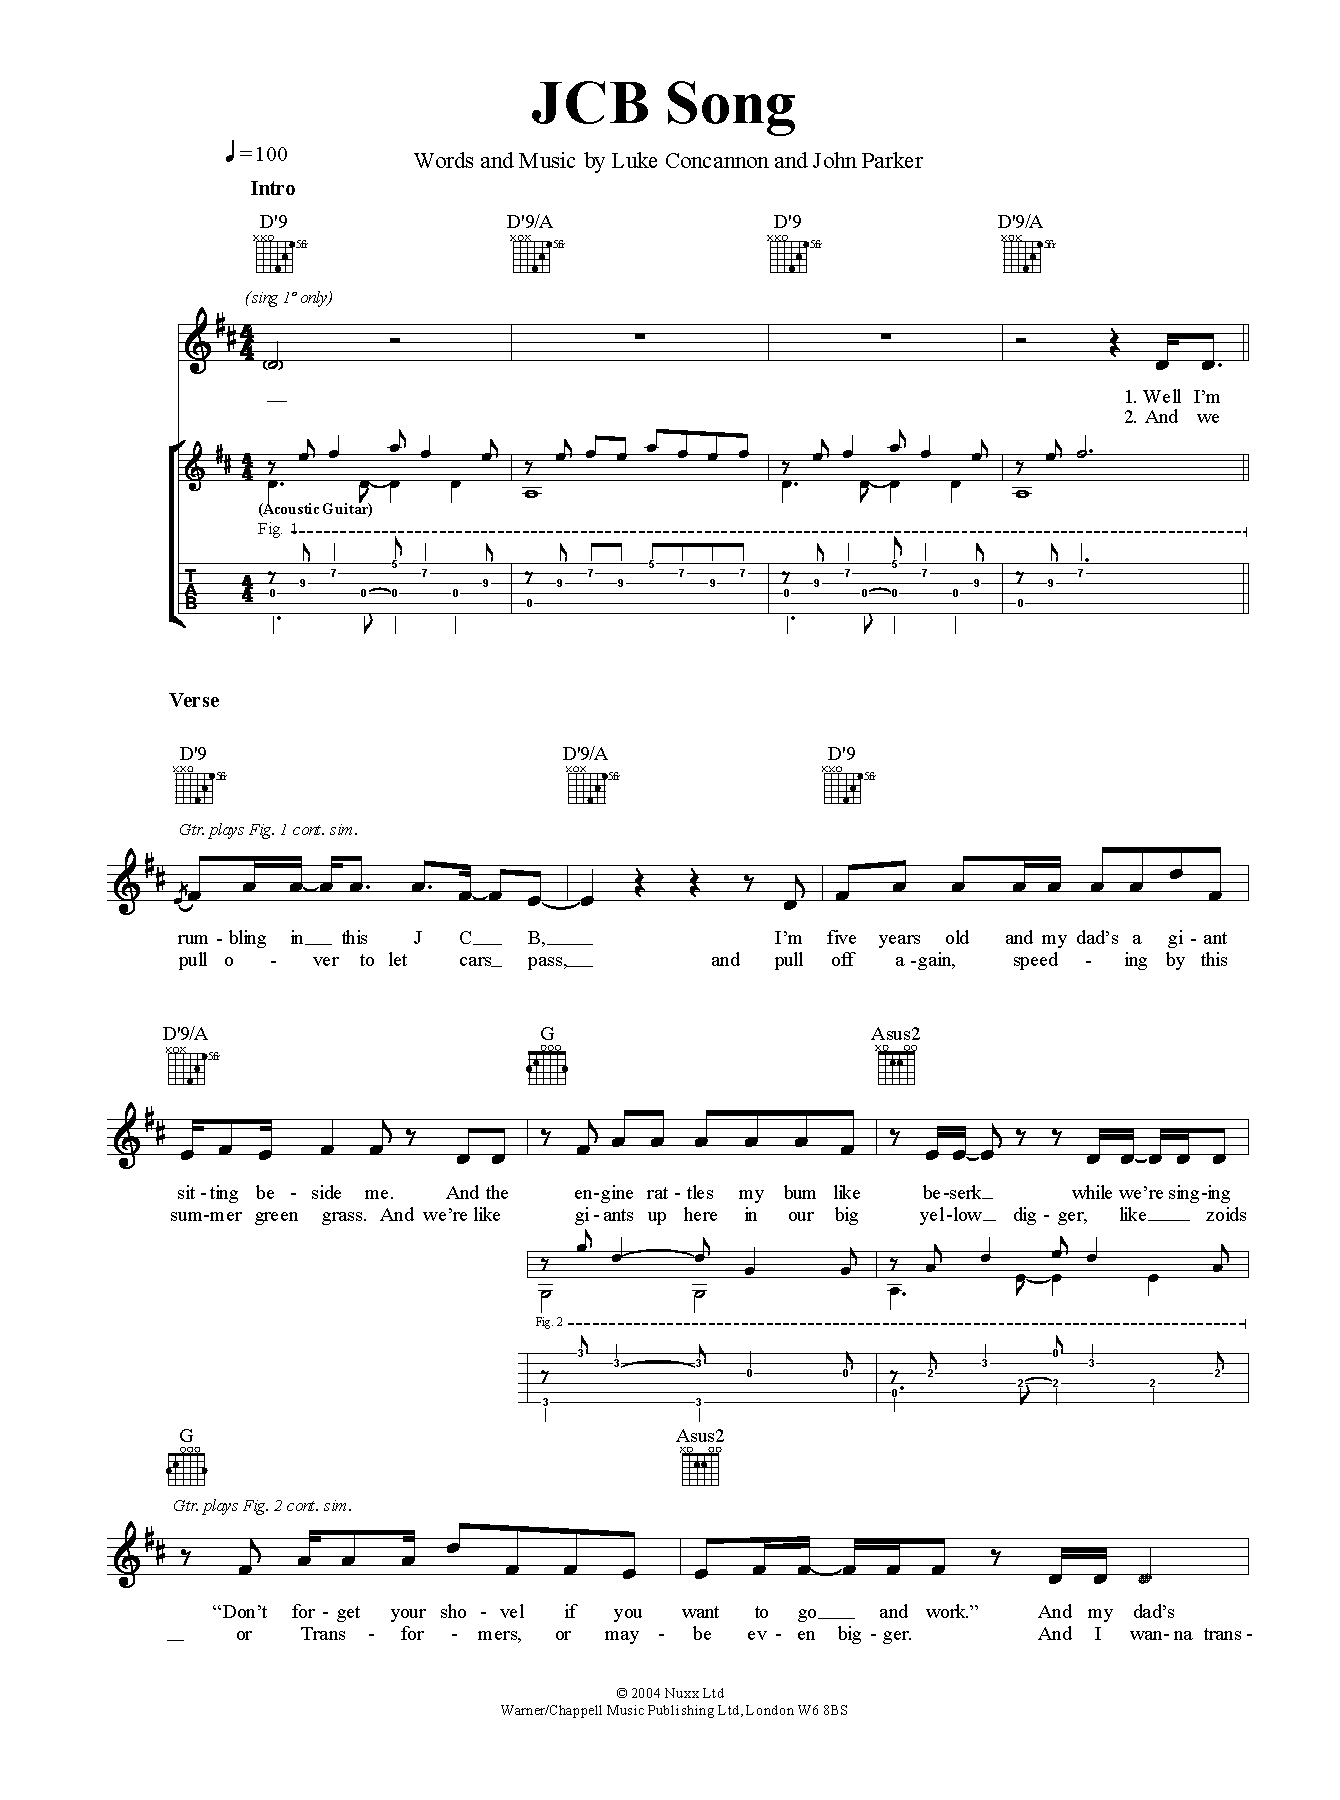 Nizlopi The JCB Song Sheet Music Notes & Chords for Guitar Tab - Download or Print PDF